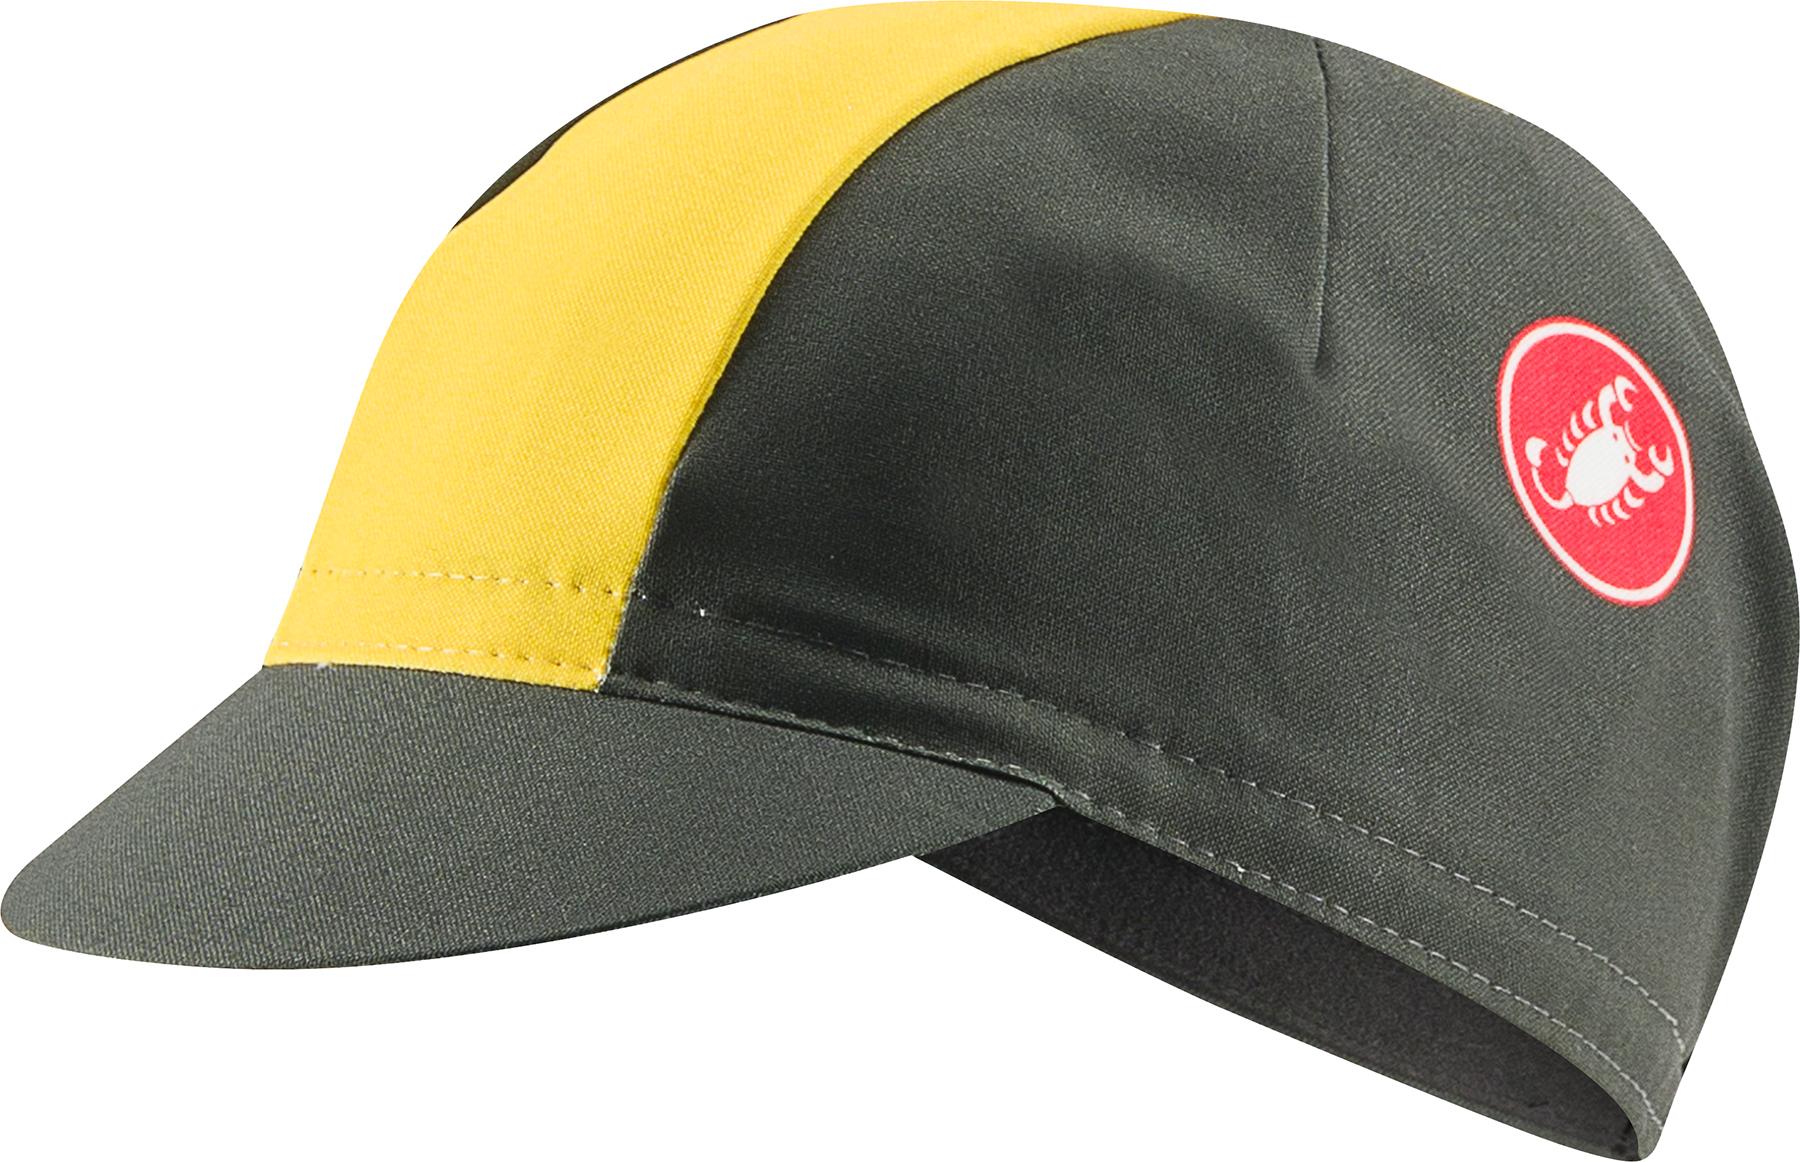 Castelli Velocissimo Kit Cap - Military/yellow